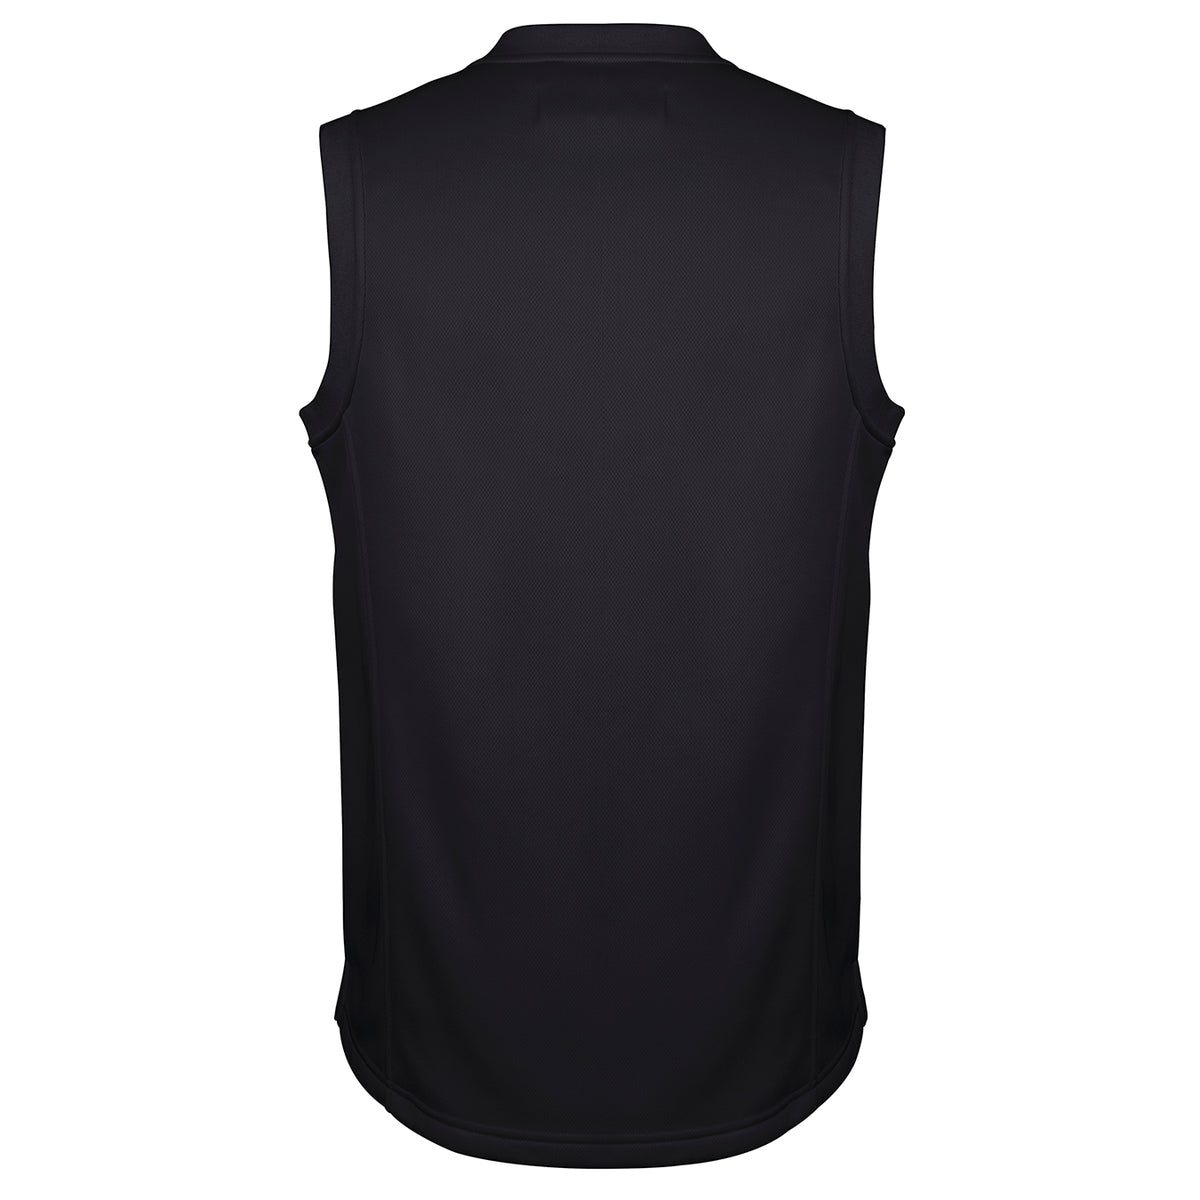 Gray Nicolls Pro Performance Slipover (Black) – Customkit.com